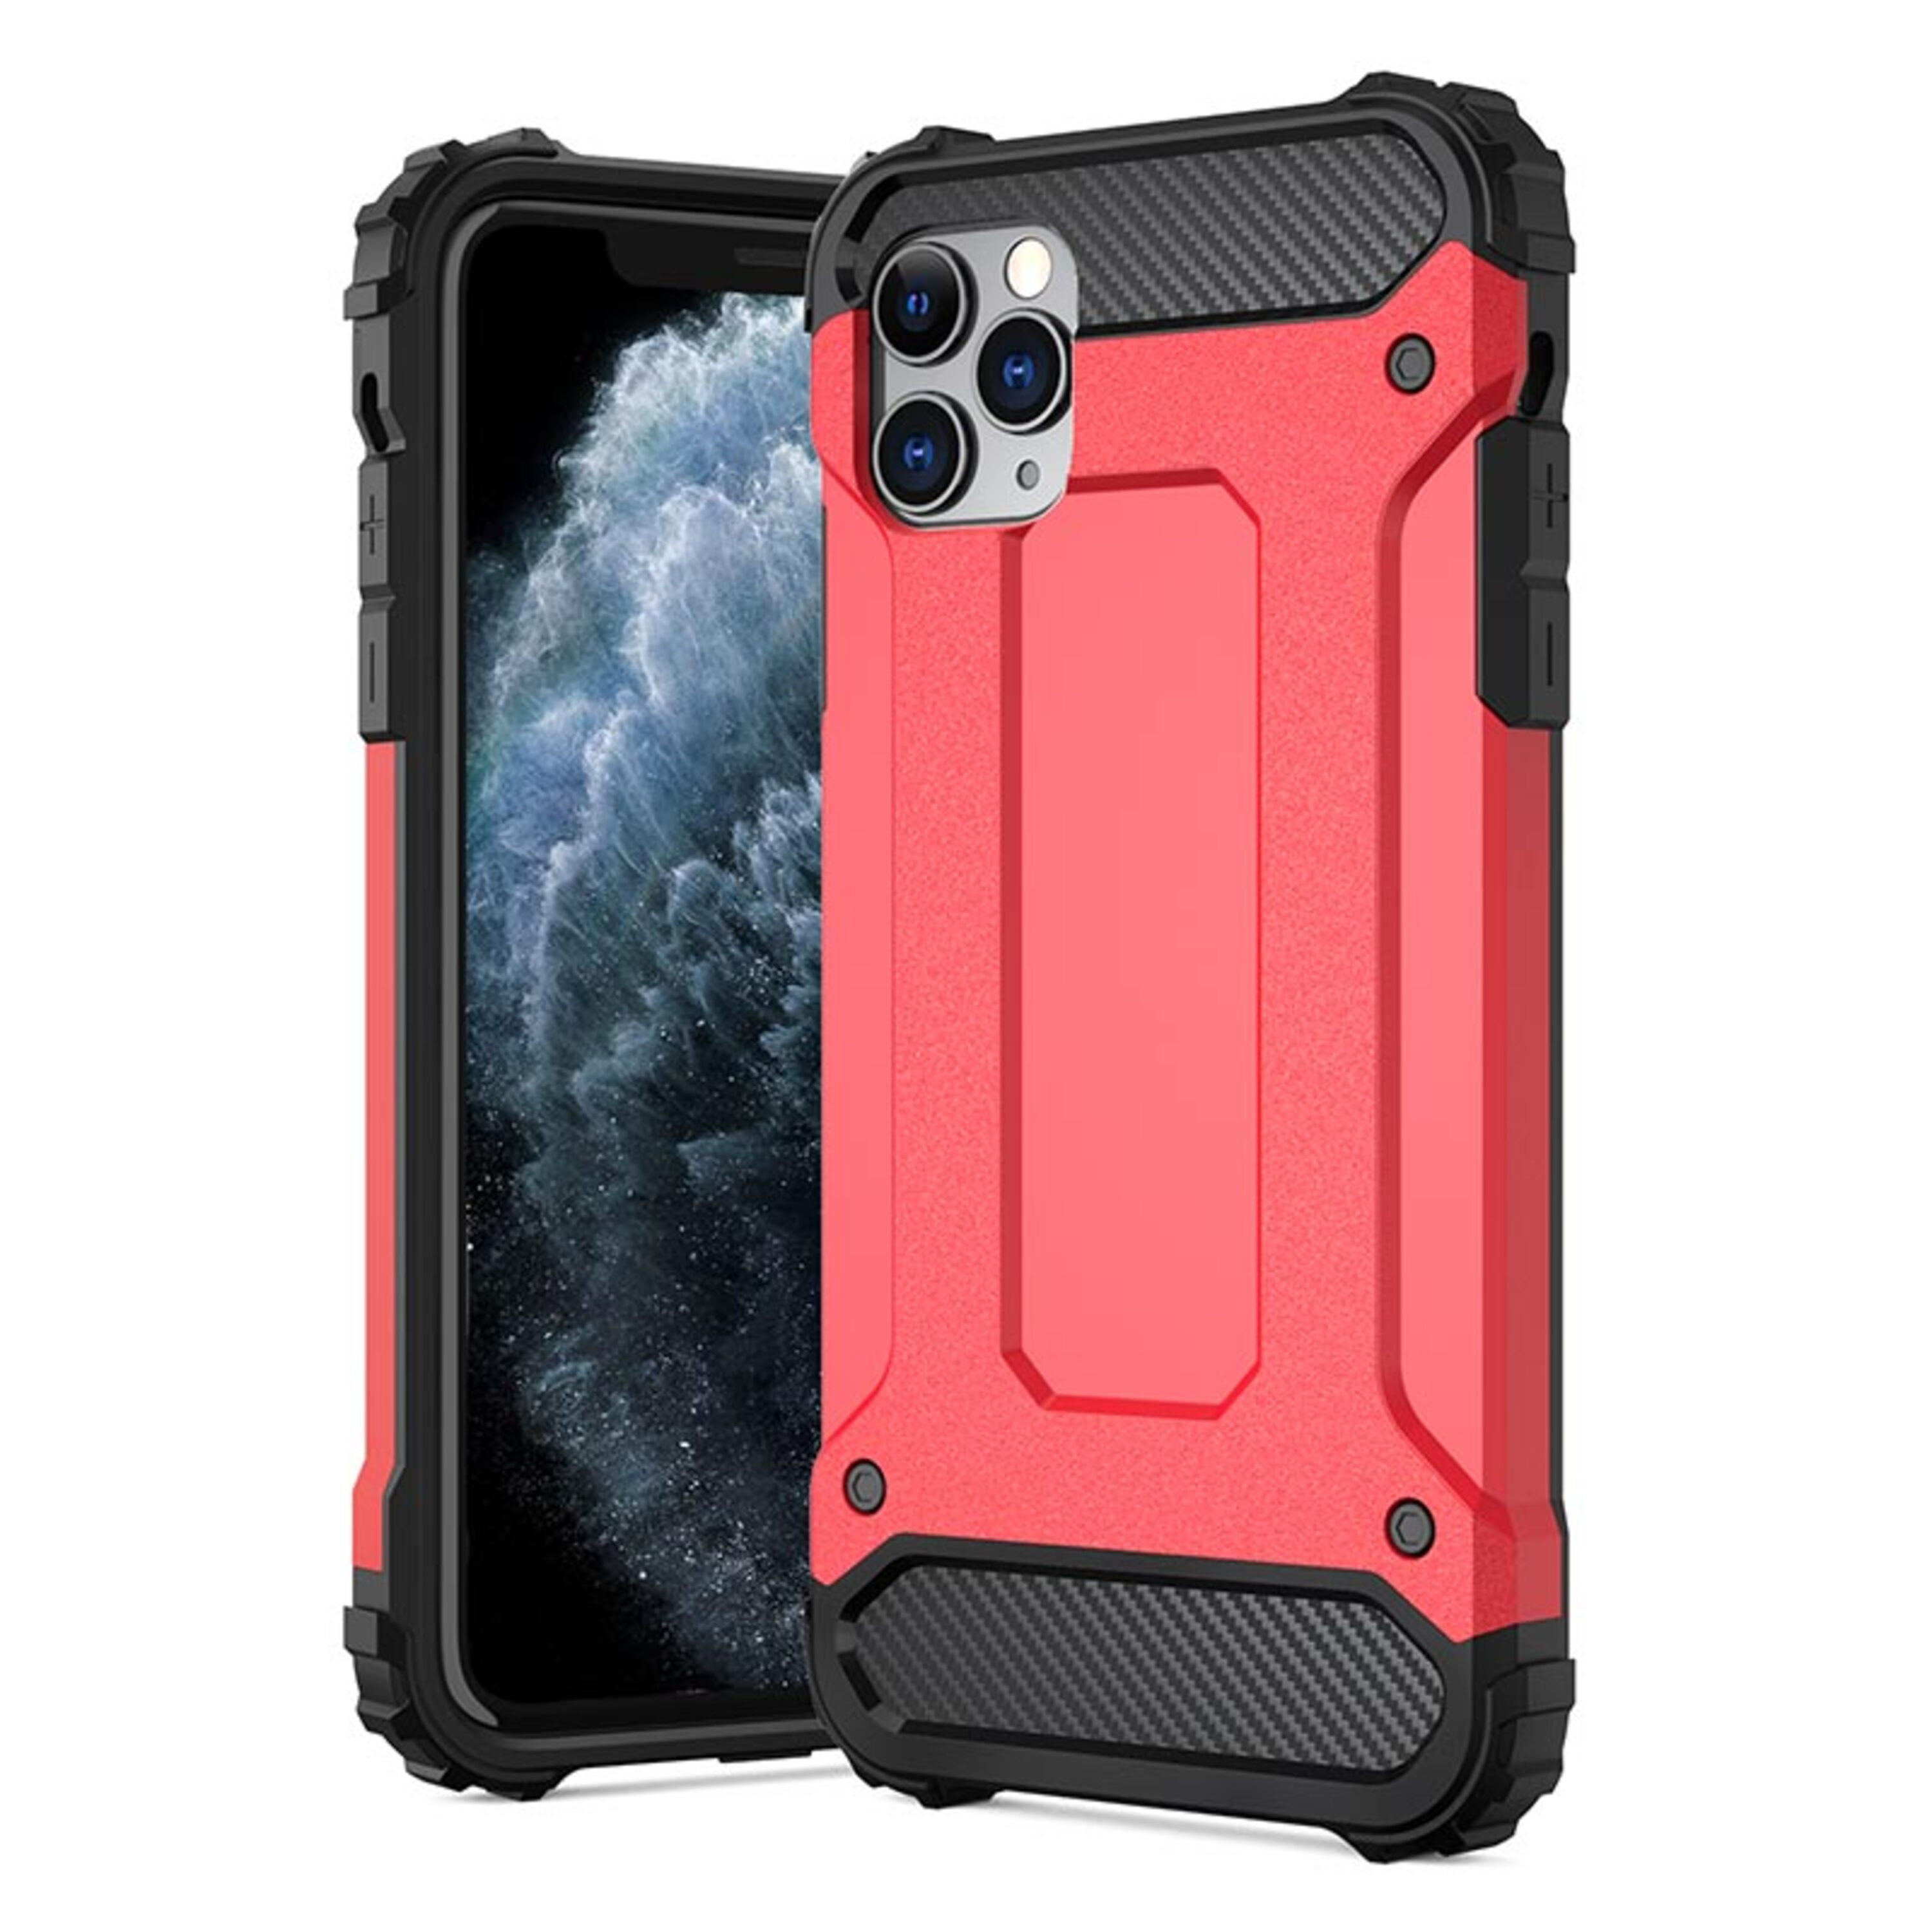 / HBASICS XS, XS, / IPhone X für iPhone, Rot Backcover, Handyhülle X Armor